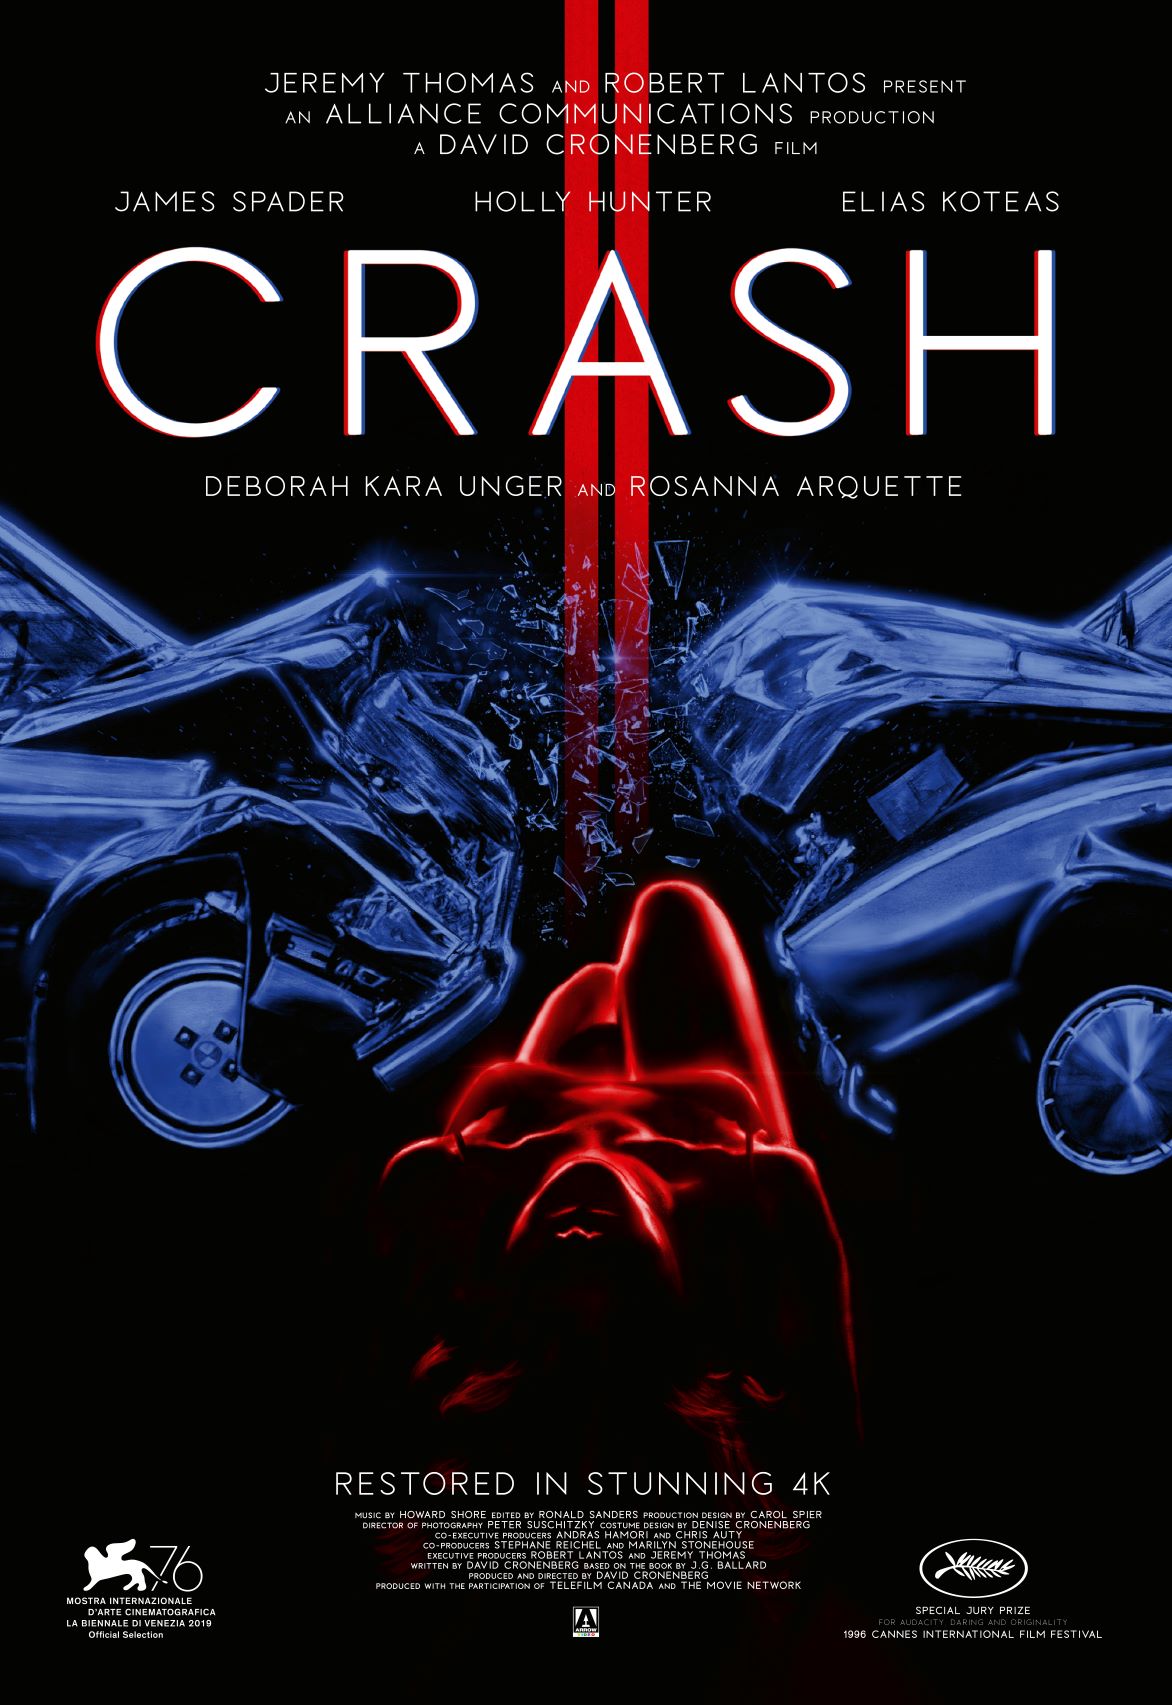 Crash Film Times And Info Showcase